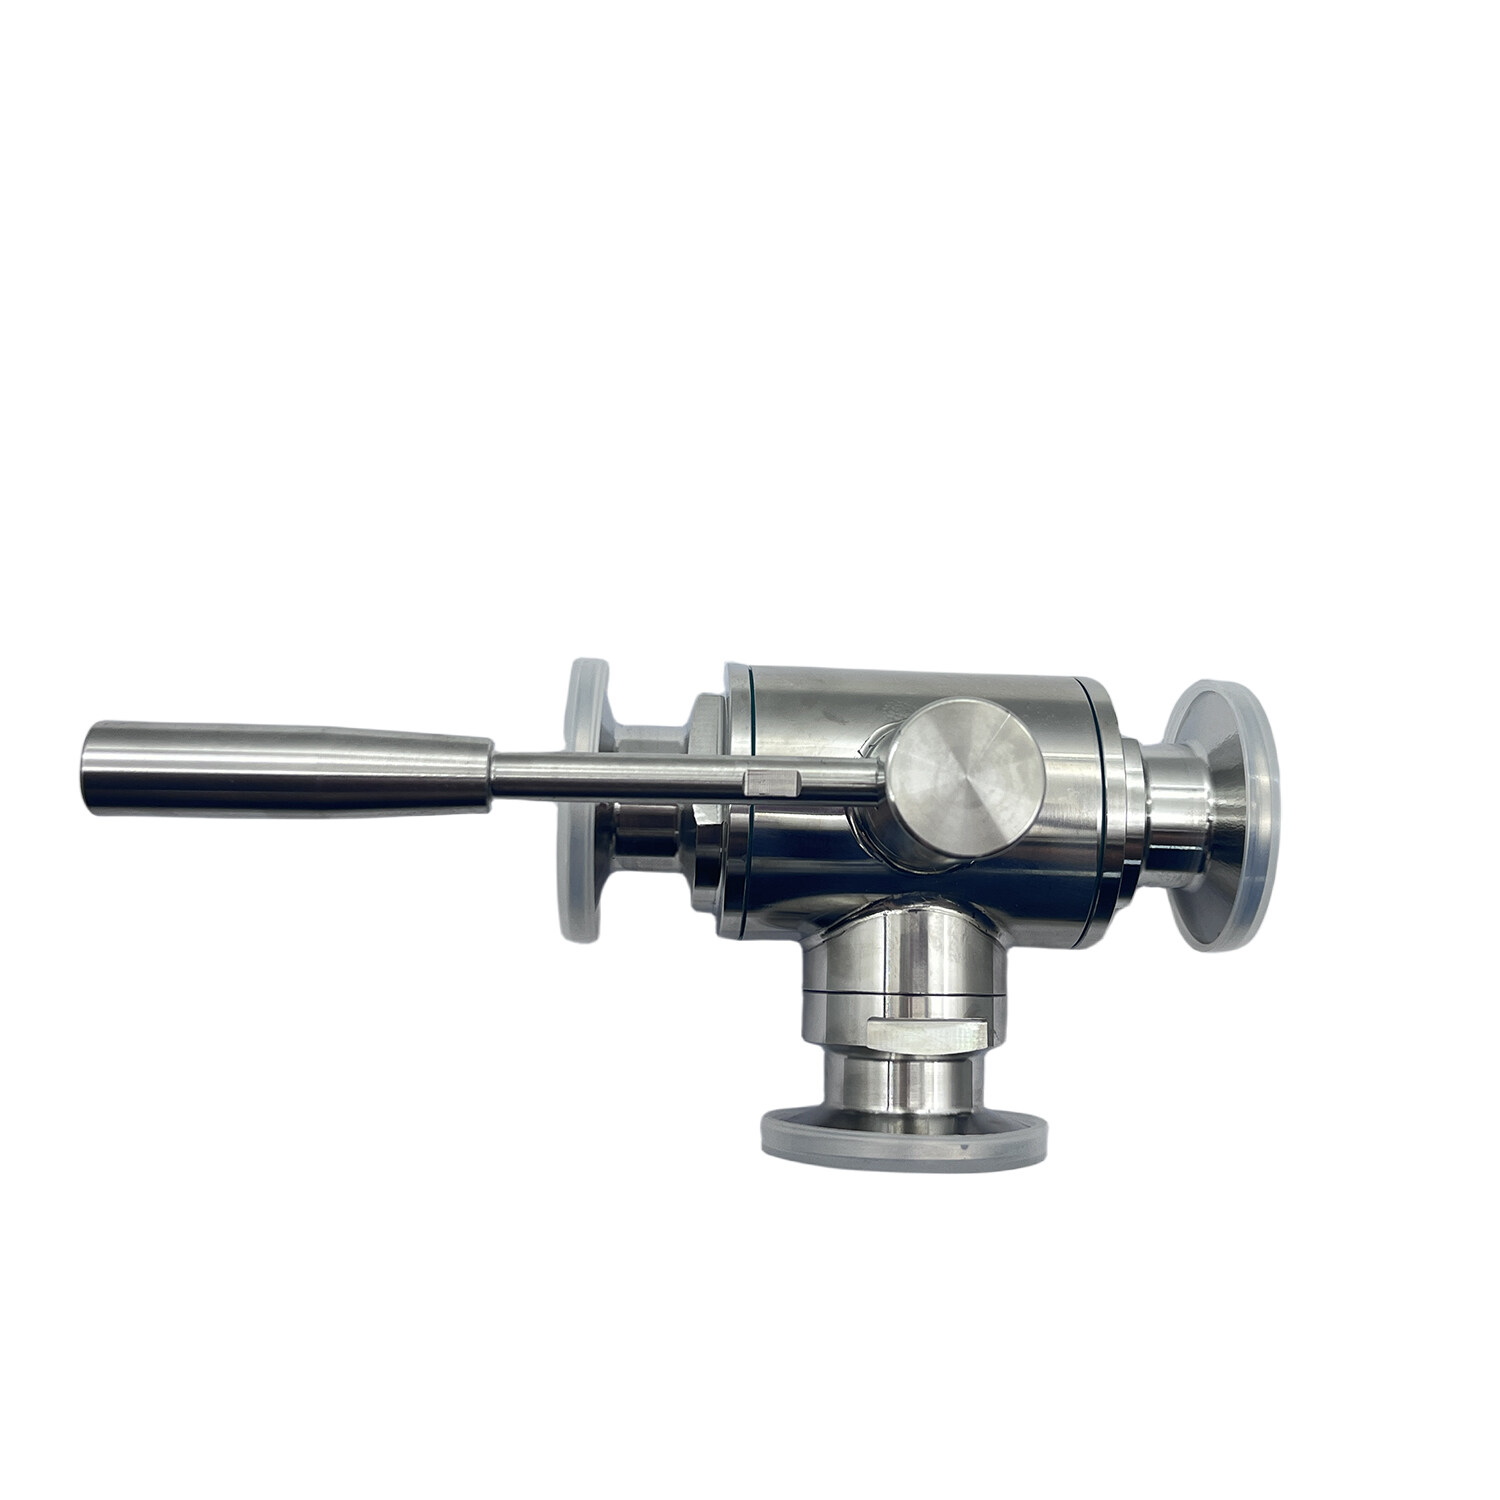 3 way sanitary ball valve, sanitary tri clamp ball valve